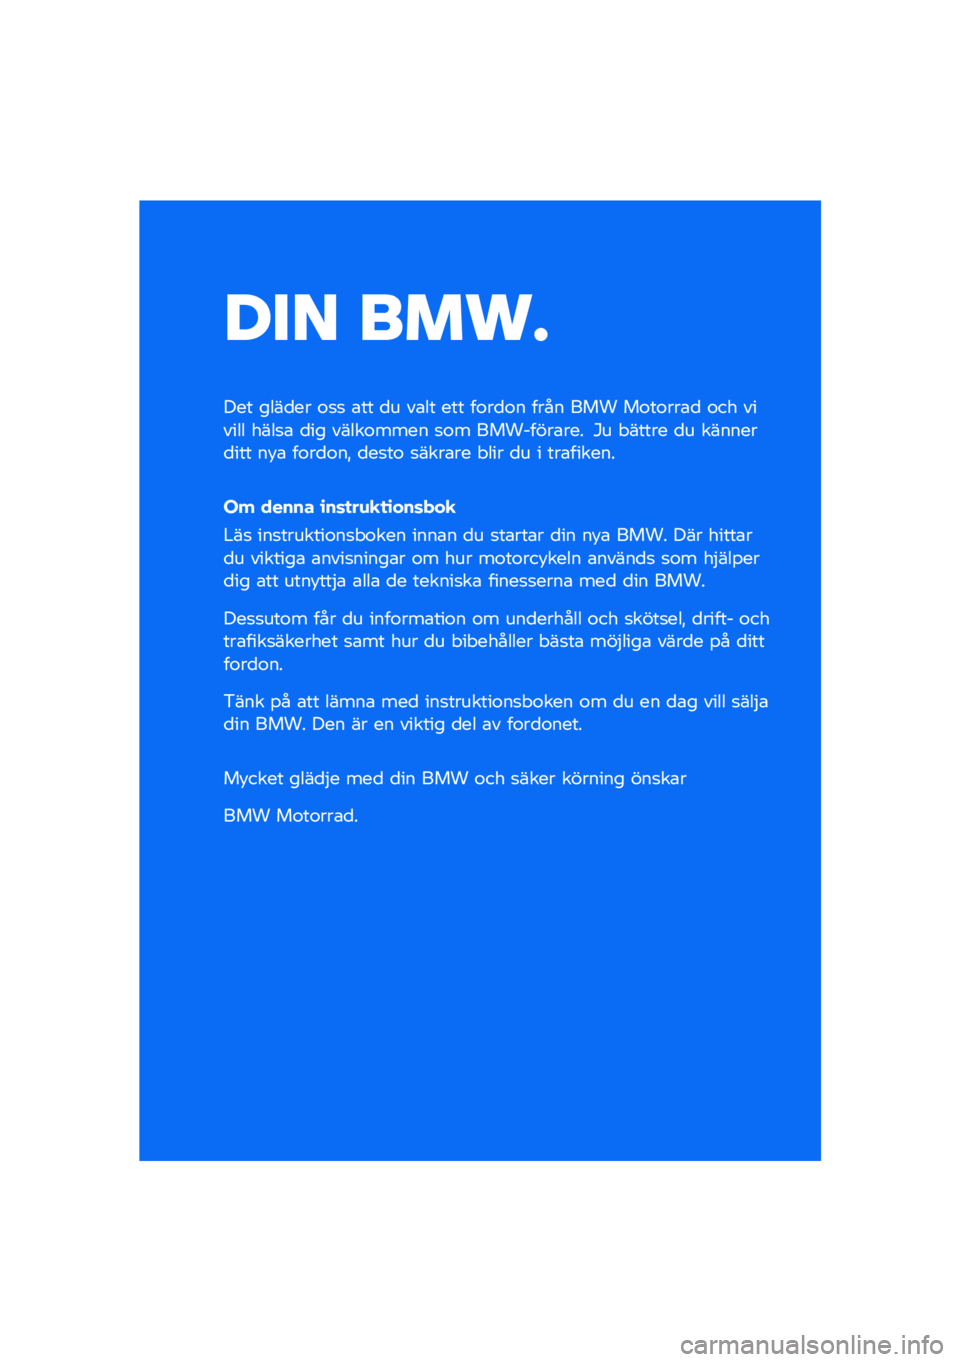 BMW MOTORRAD F 850 GS 2021  Instruktionsbok (in Swedish) ��� ����\b
��� ����
�� �\f�
�
 �\b�� �
� ��\b�� ��� ��\f��
�\f� ���� ��� ��\f��\f���\b�
 �\f�� ������ ����
�\b �
�� �����\f���� �
�\f� ���